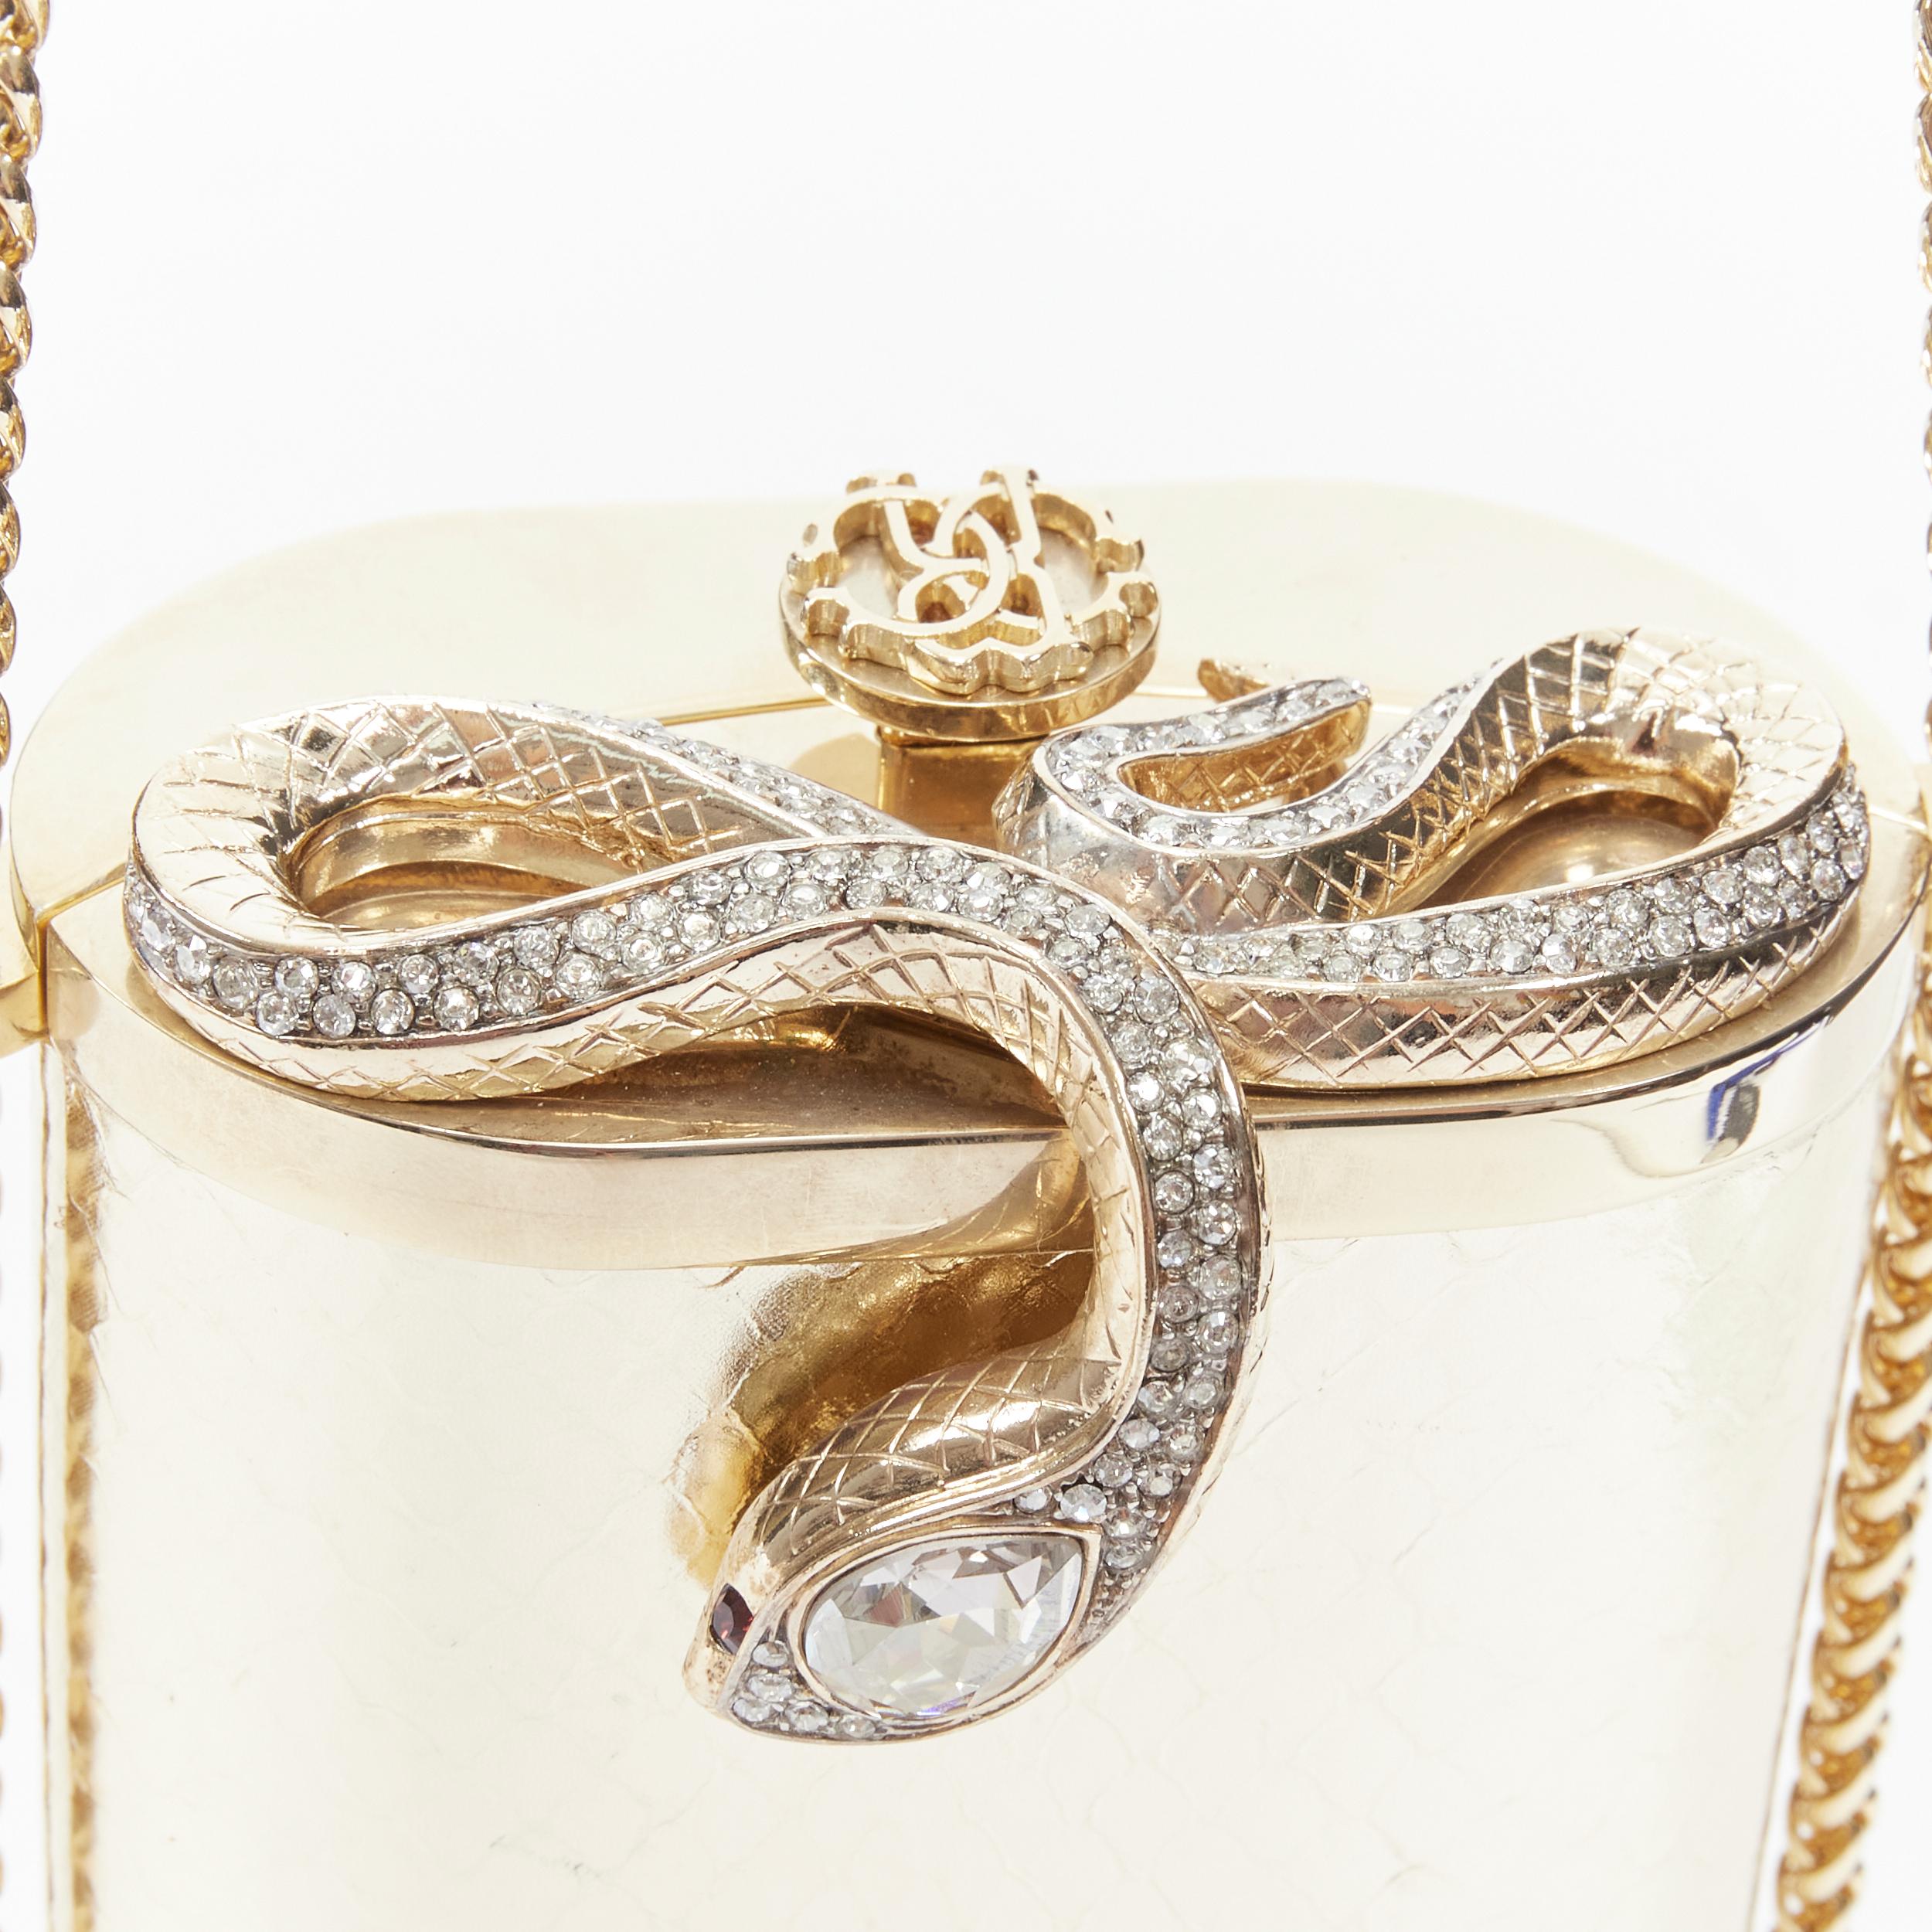 ROBERTO CAVALLI metallic gold leather crystal Serpent snake chain box clutch 1